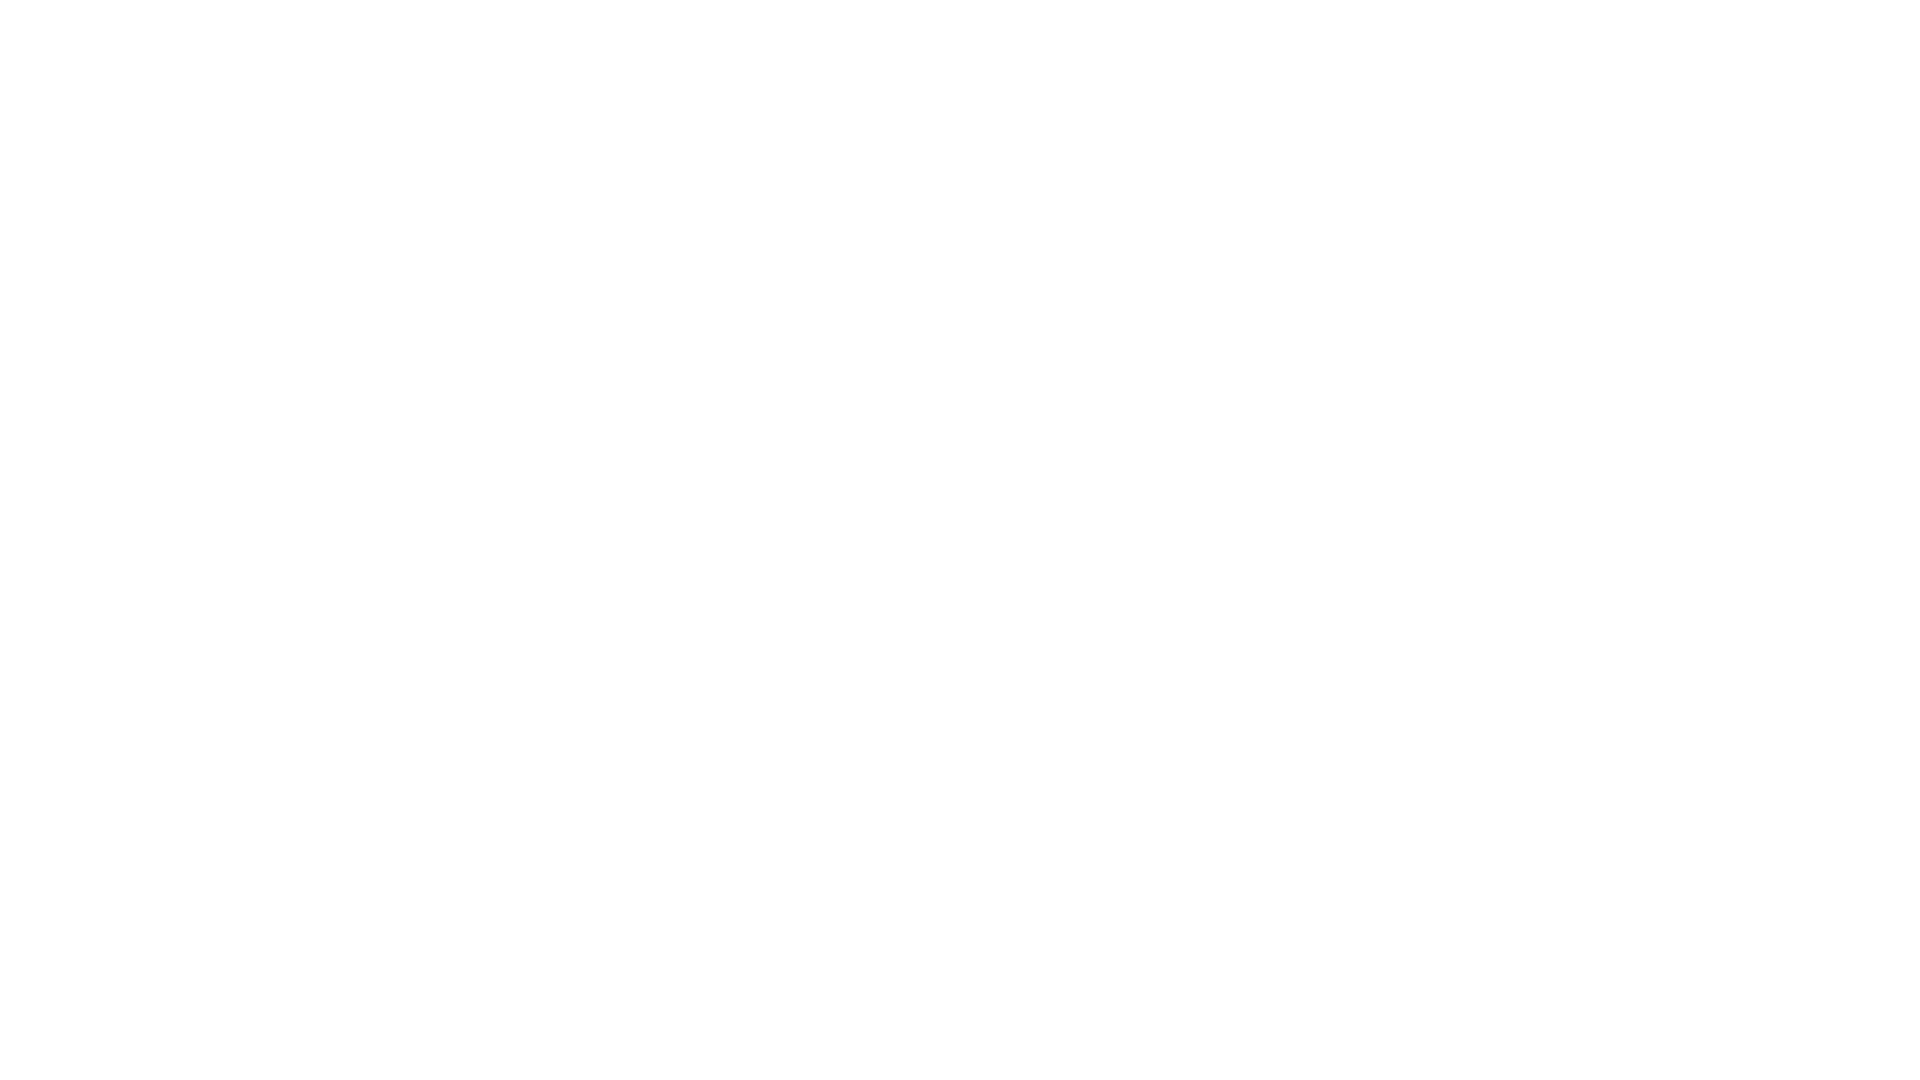 Plan_Recuperacion